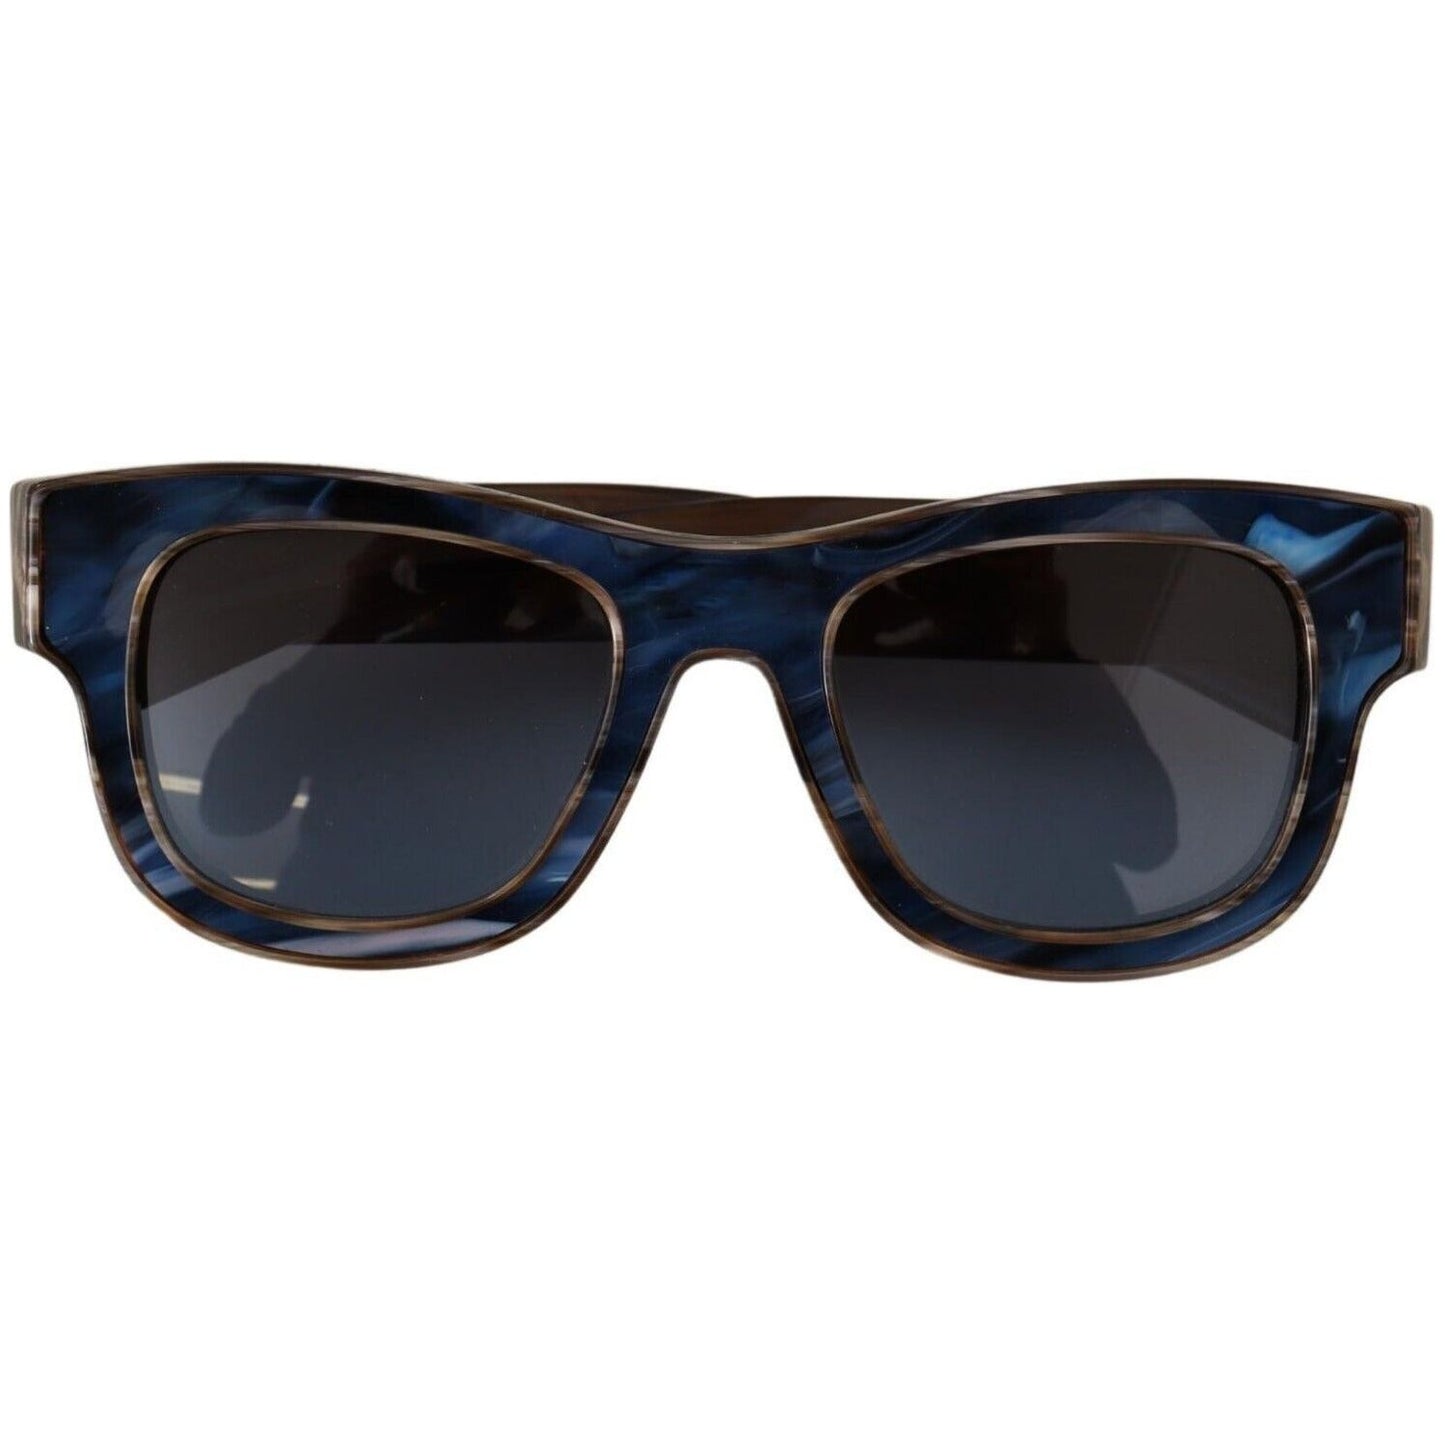 Dolce & Gabbana Elegant Brown & Blue Gradient Sunglasses brown-blue-gradient-lenses-eyewear-sunglasses WOMAN SUNGLASSES s-l1600-94-1-59a7ac5d-212.jpg